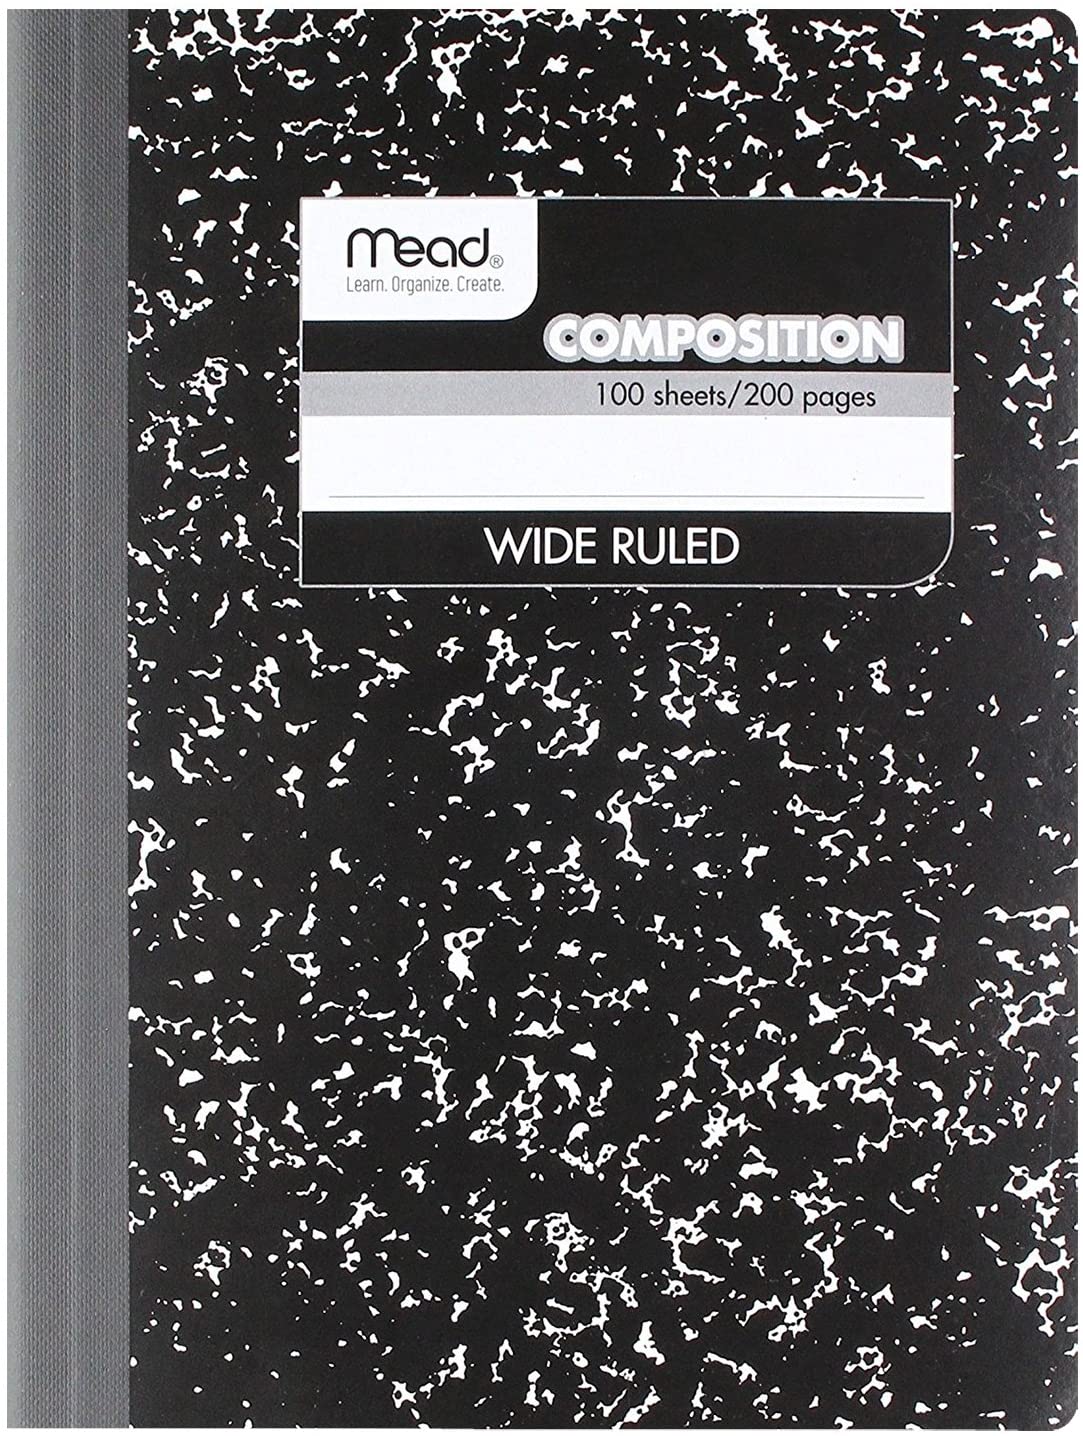 Mead Composition book Black